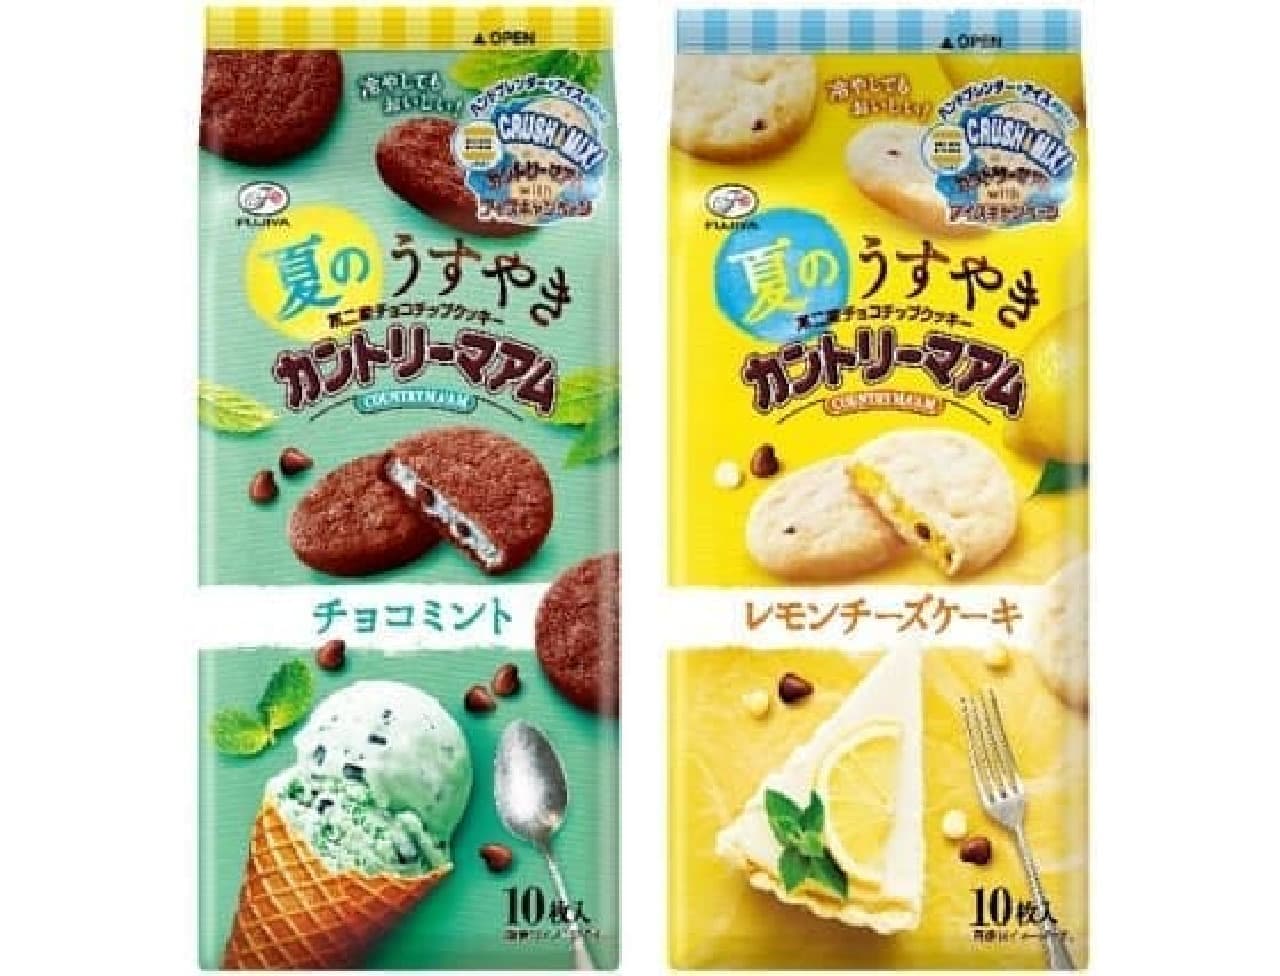 Fujiya "Summer Light Country Ma'am (chocolate mint)" and "Same (lemon cheesecake)"